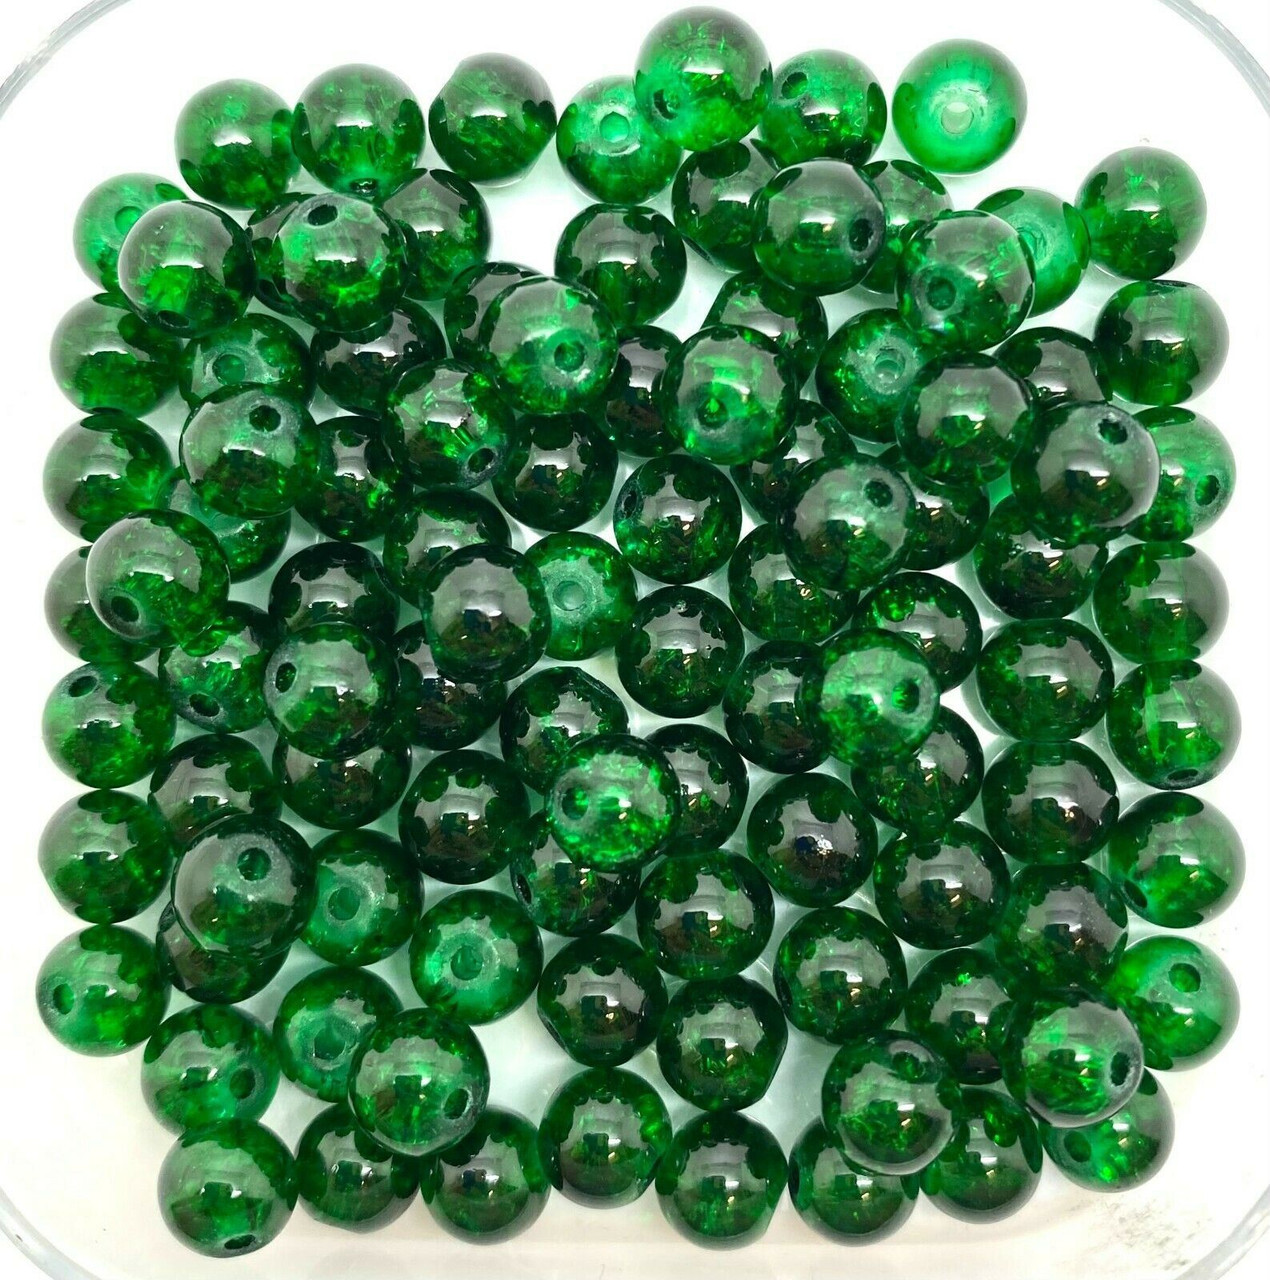 4mm Crackle Glass Beads - Dark Green, 200 beads